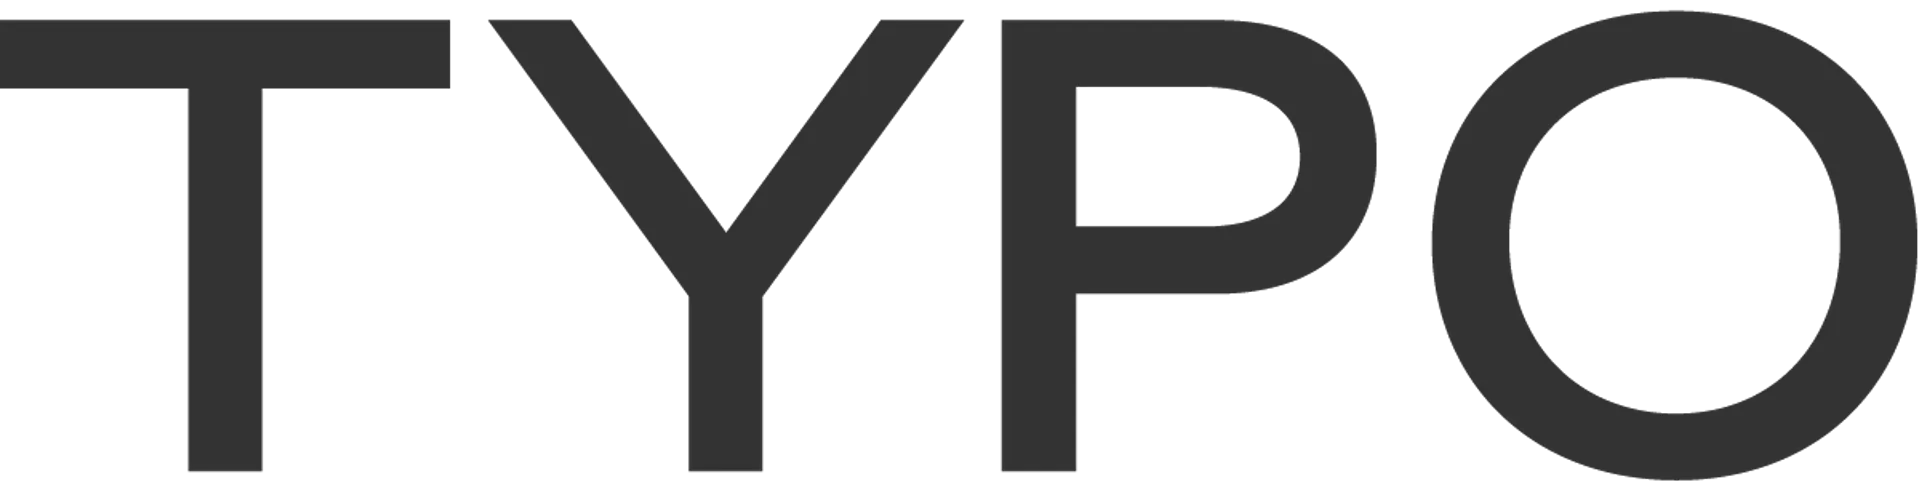 TYPO logo. Current catalogue